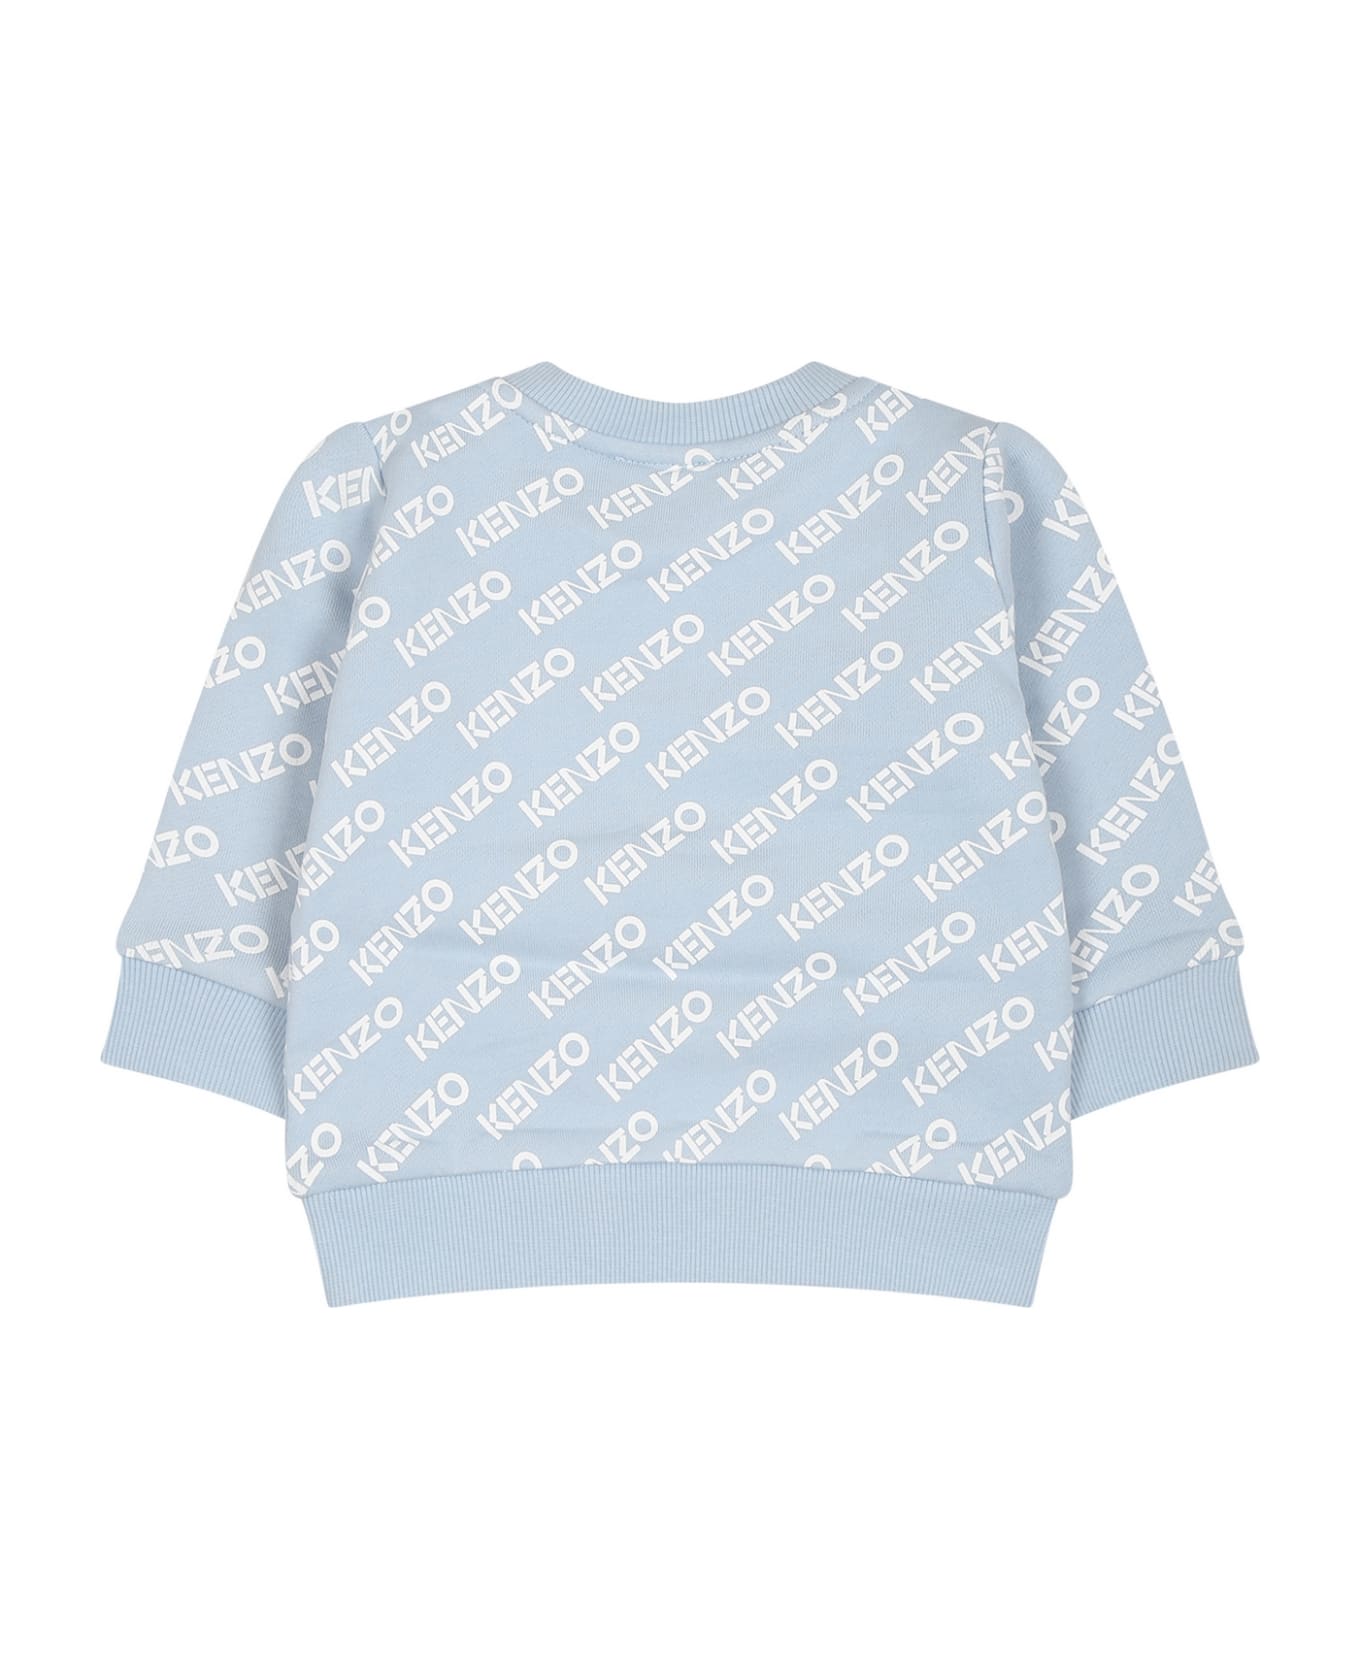 Kenzo Kids Light Blue Sweatshirt For Baby Boy With Logo - Light Blue